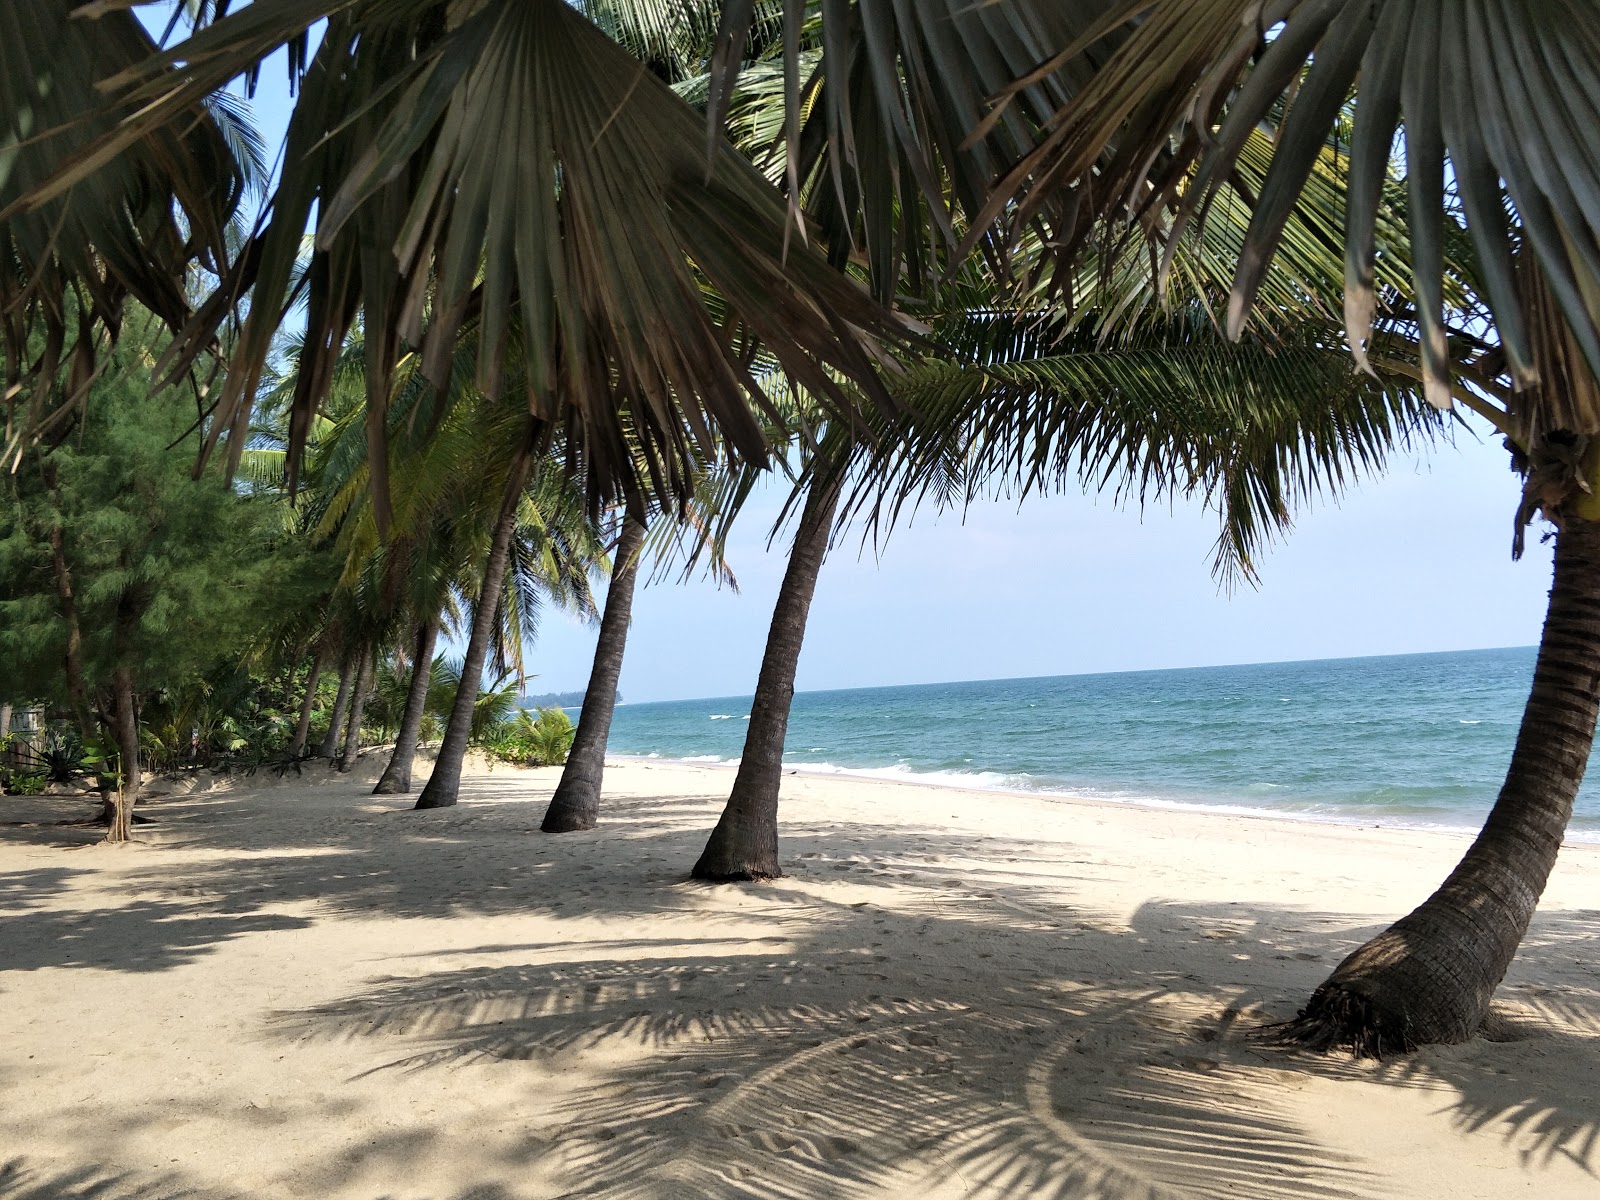 Foto de Lamkum Beach - lugar popular entre os apreciadores de relaxamento